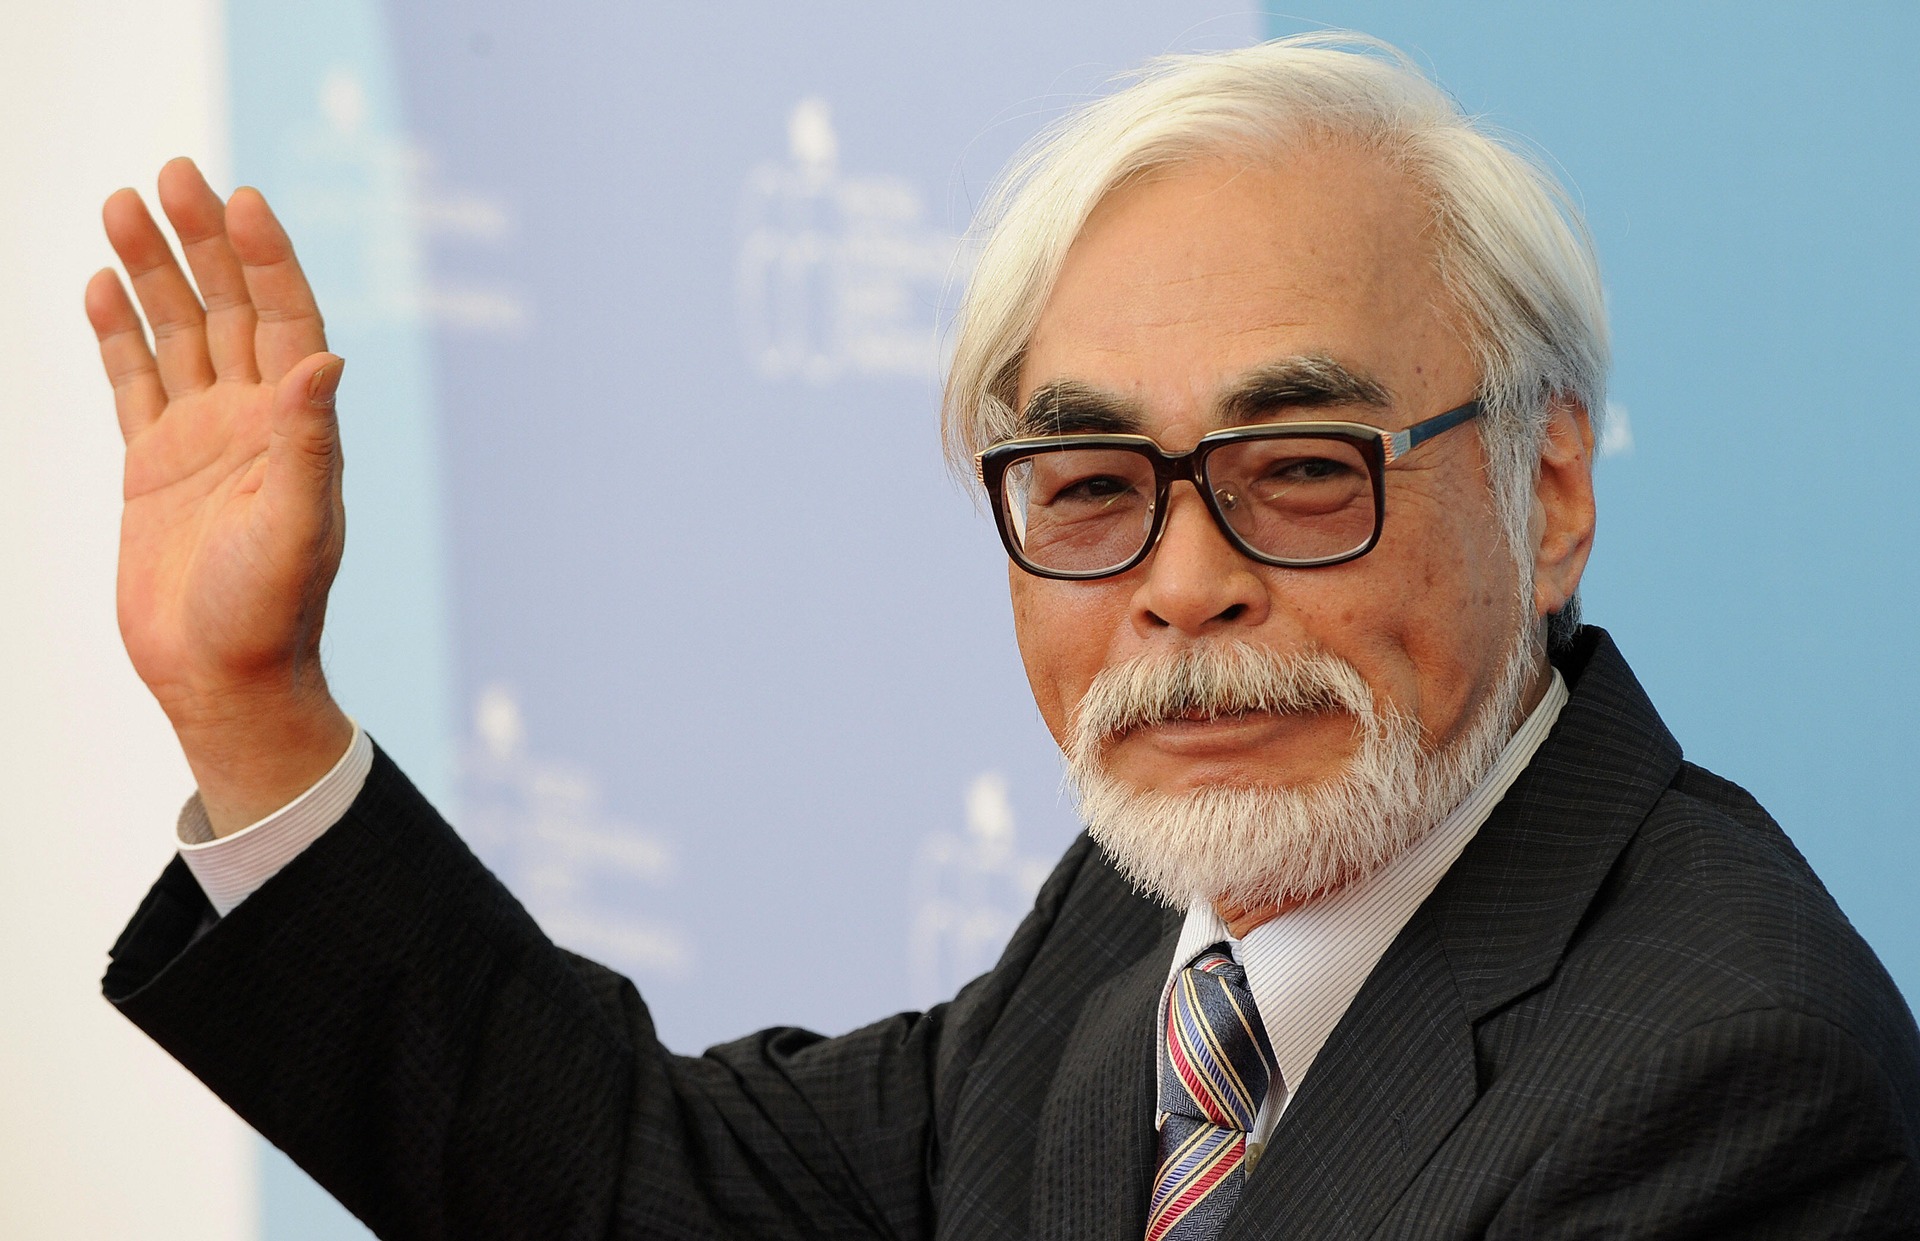 Come Hayao Miyazaki fece piangere 3 ricercatori 1